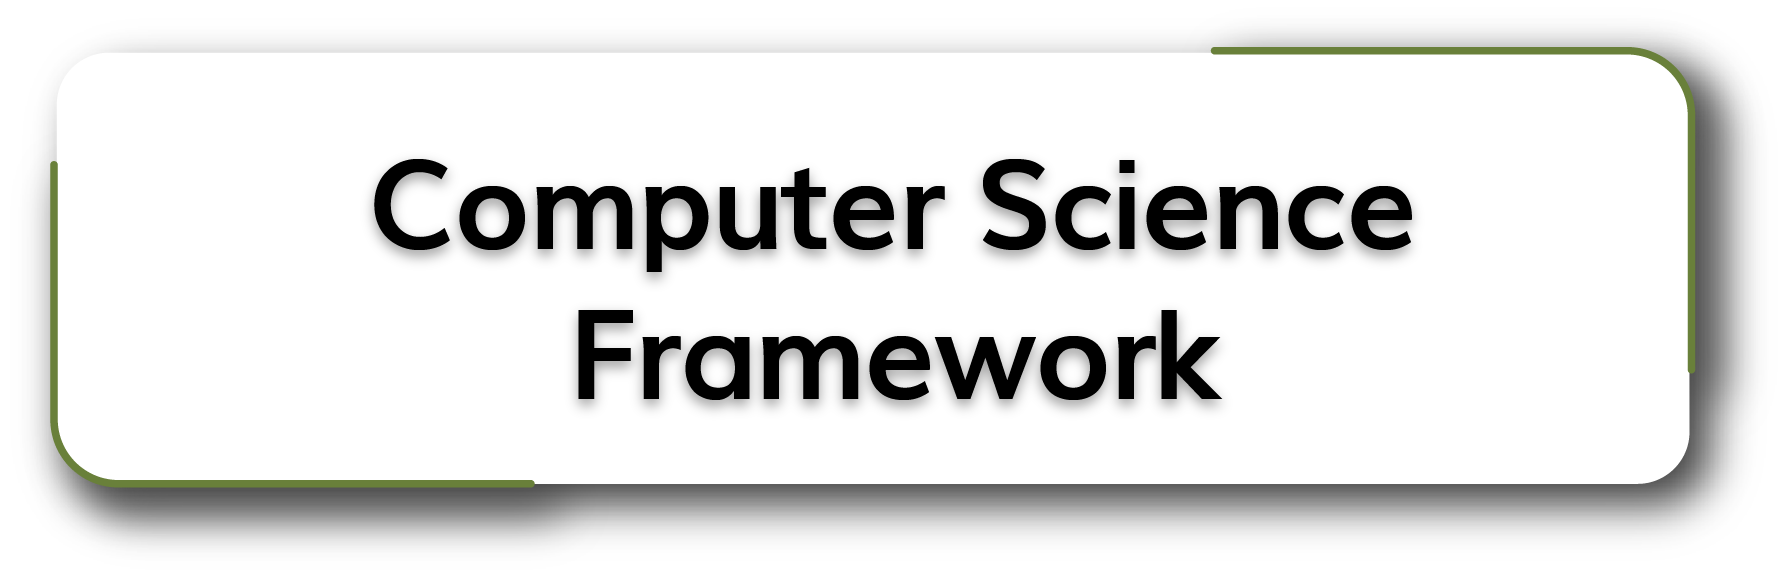 Computer Science Framework Button